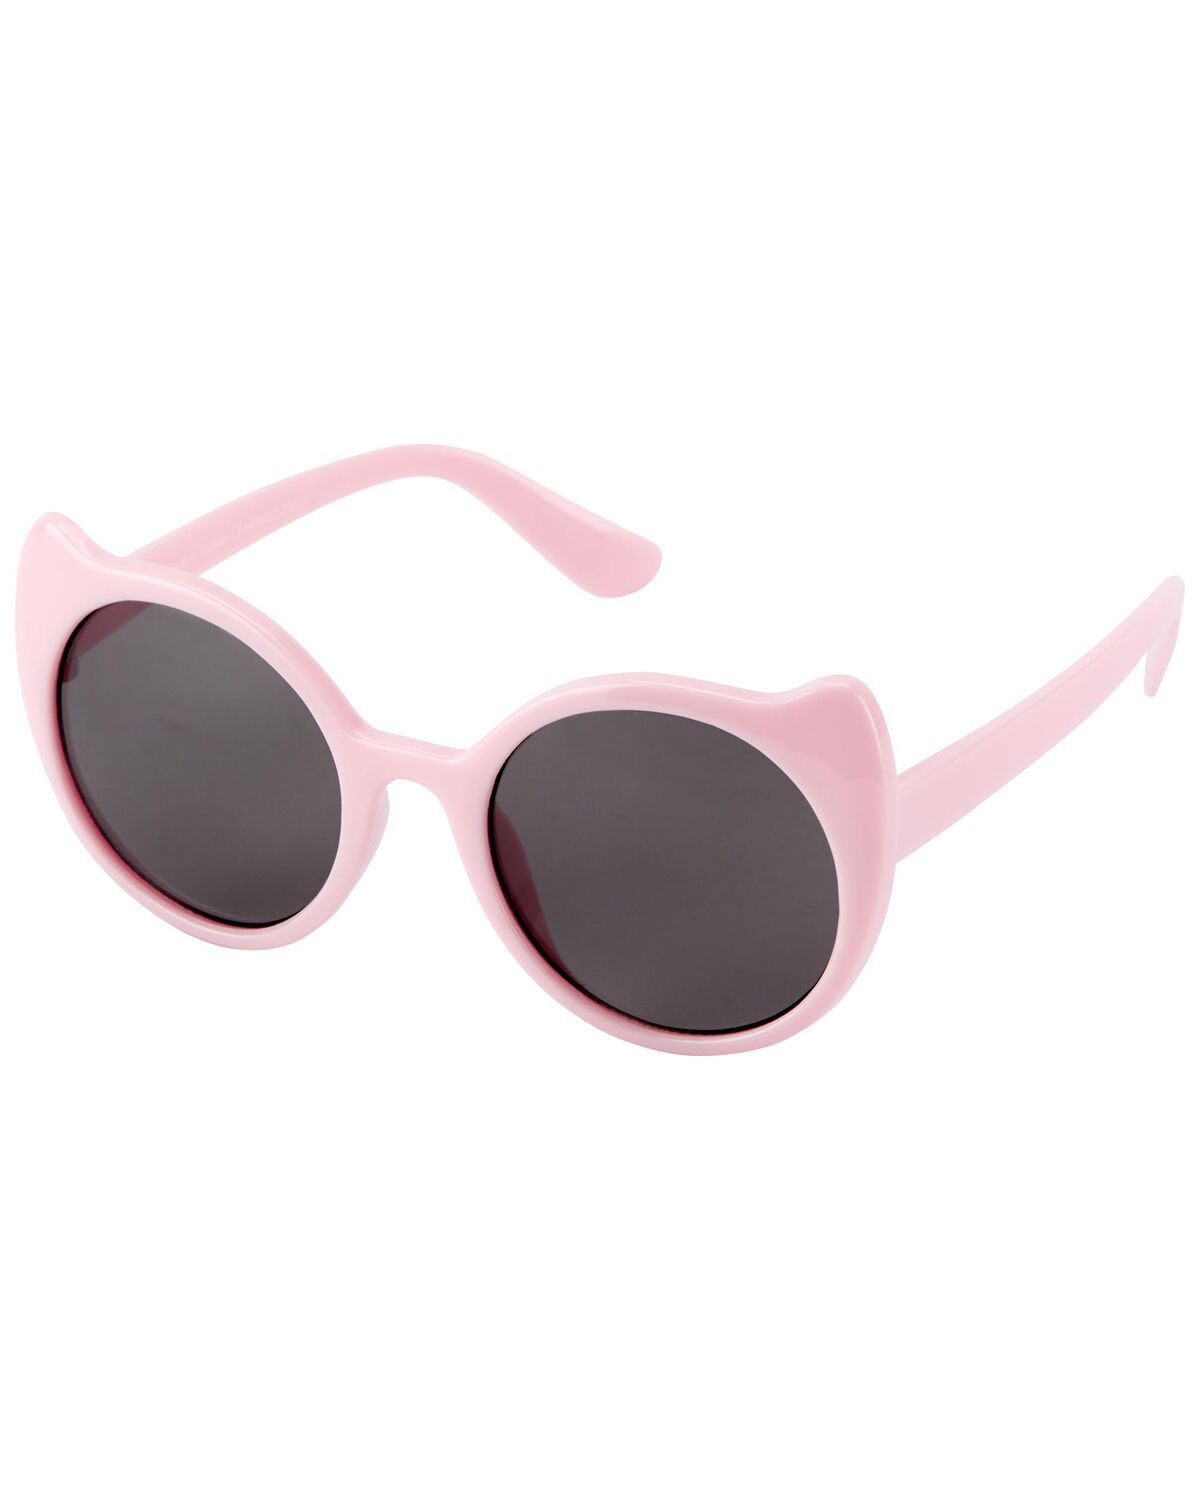 Pink Toddler Cat Eye Sunglasses | carters.com | Carter's